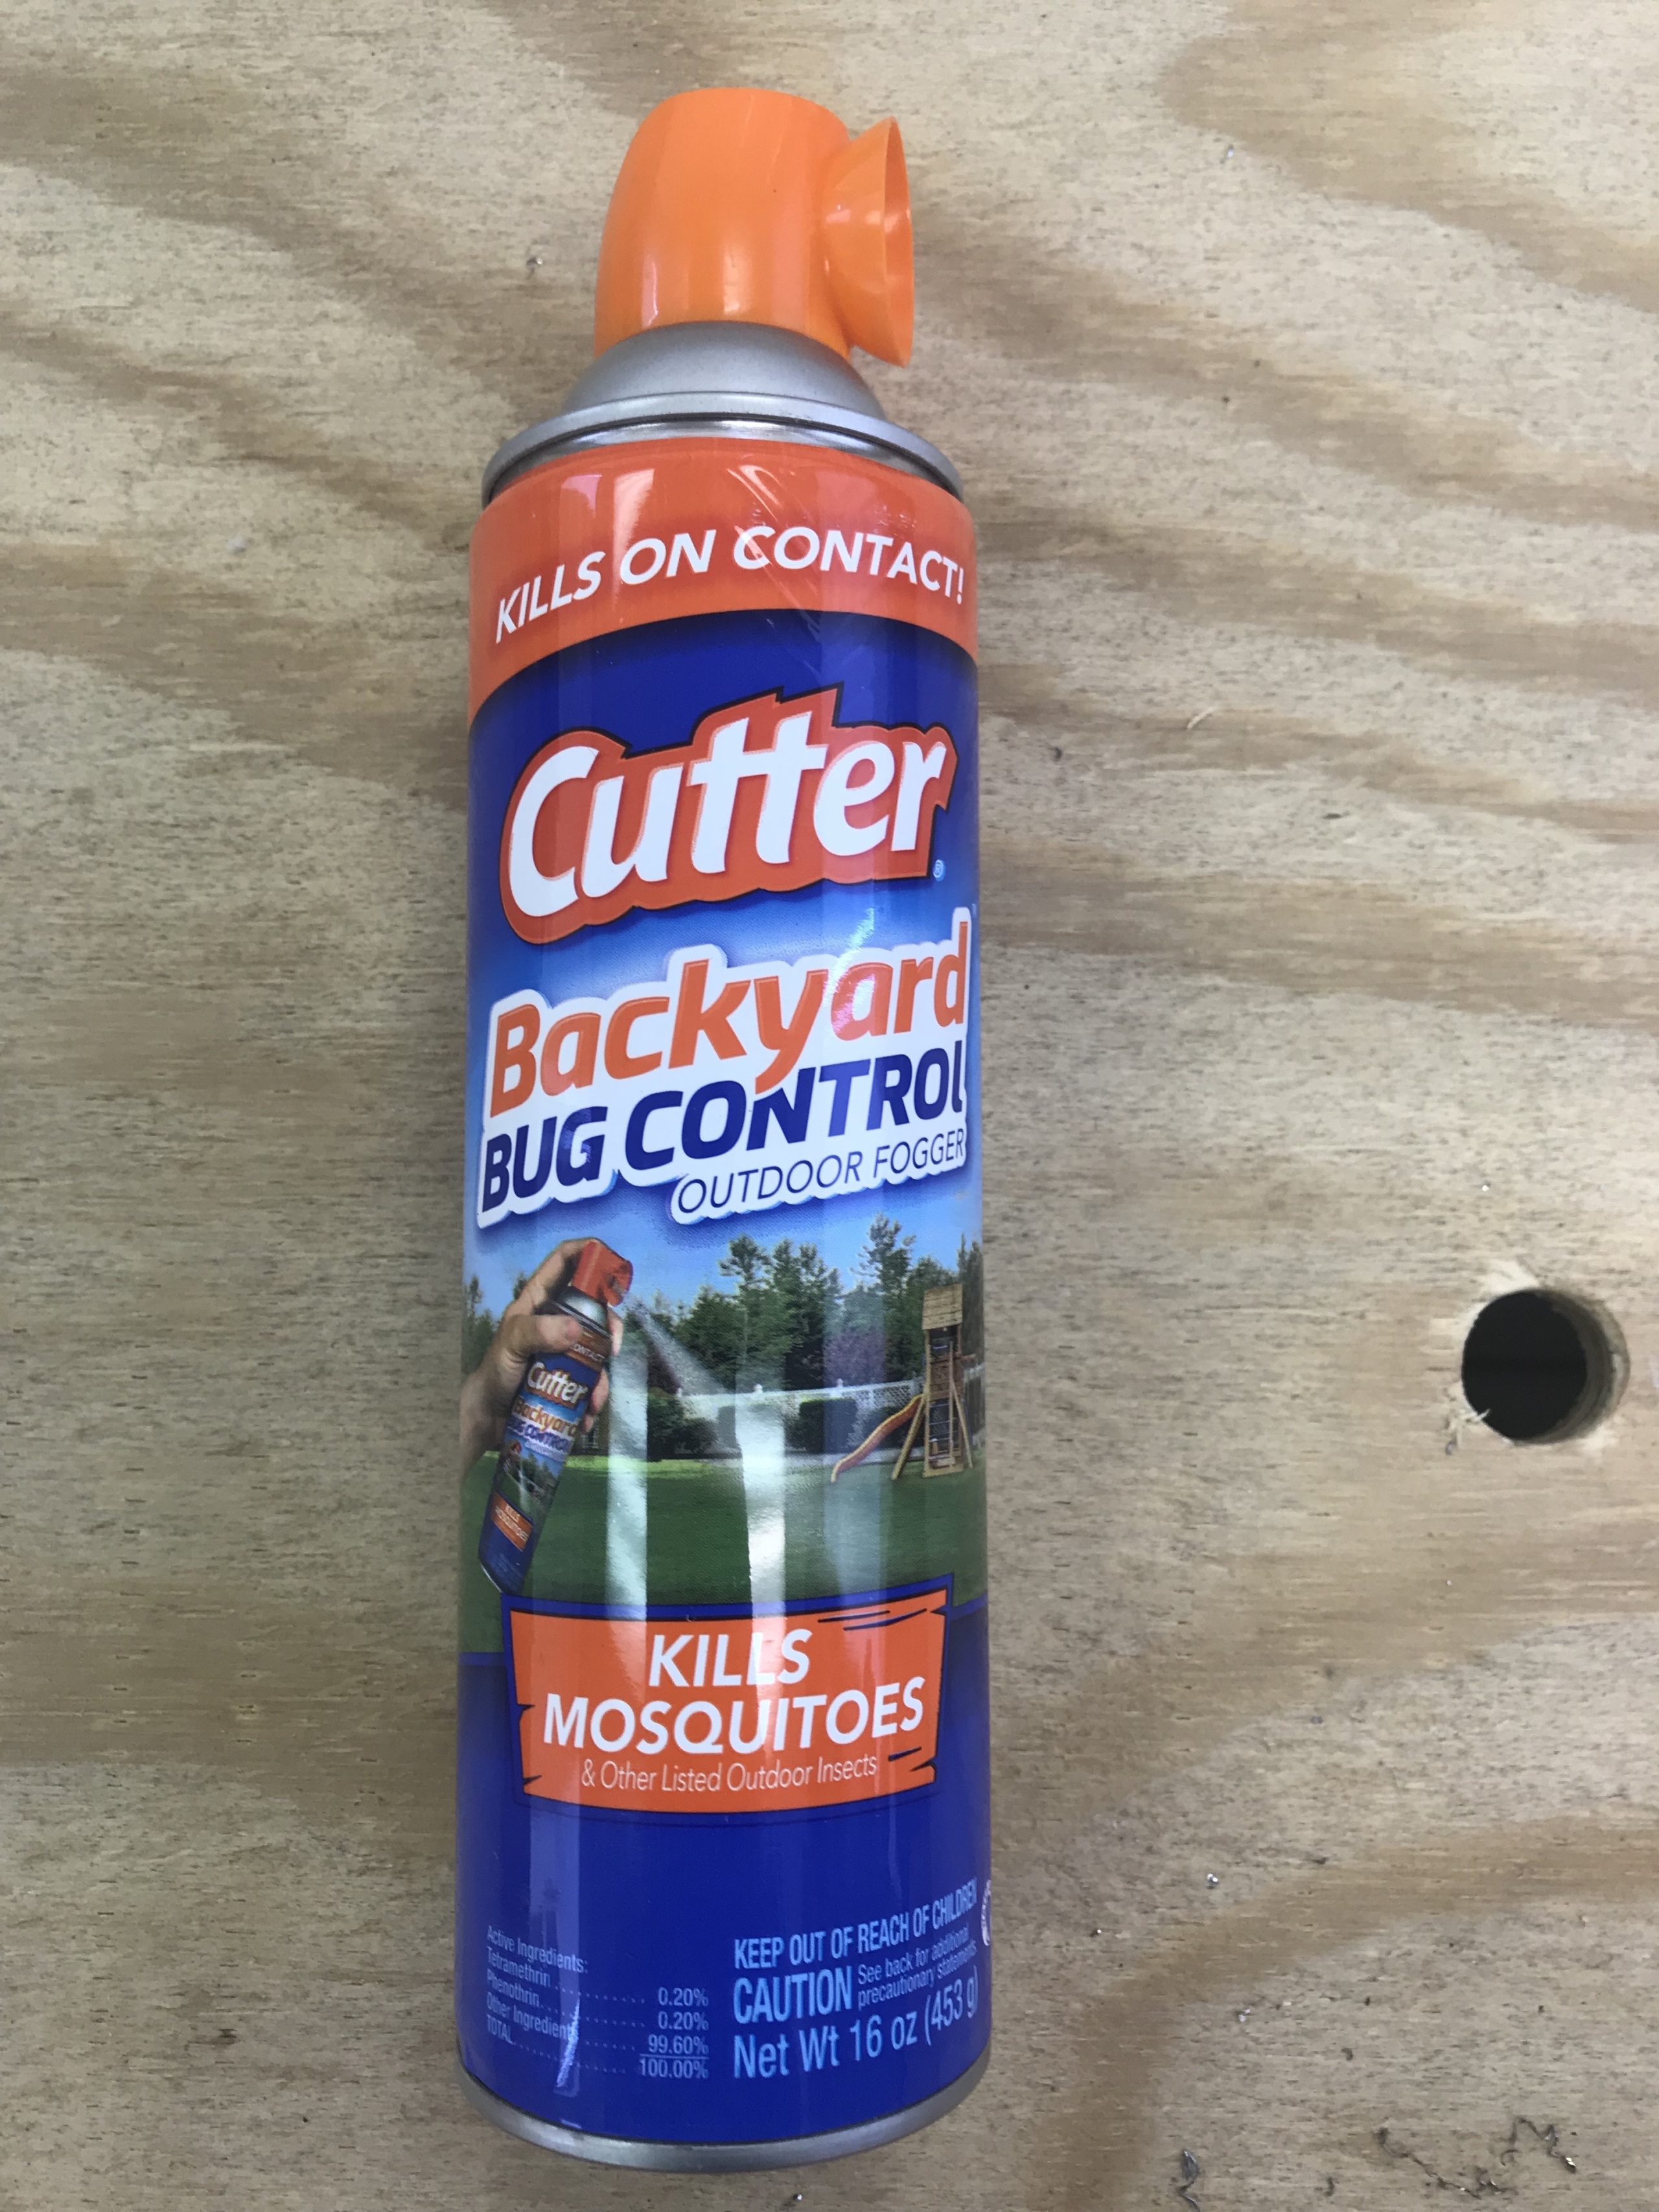 Cutter Backyard Bug Control Outdoor Fogger Camberly Gardens Retail Location